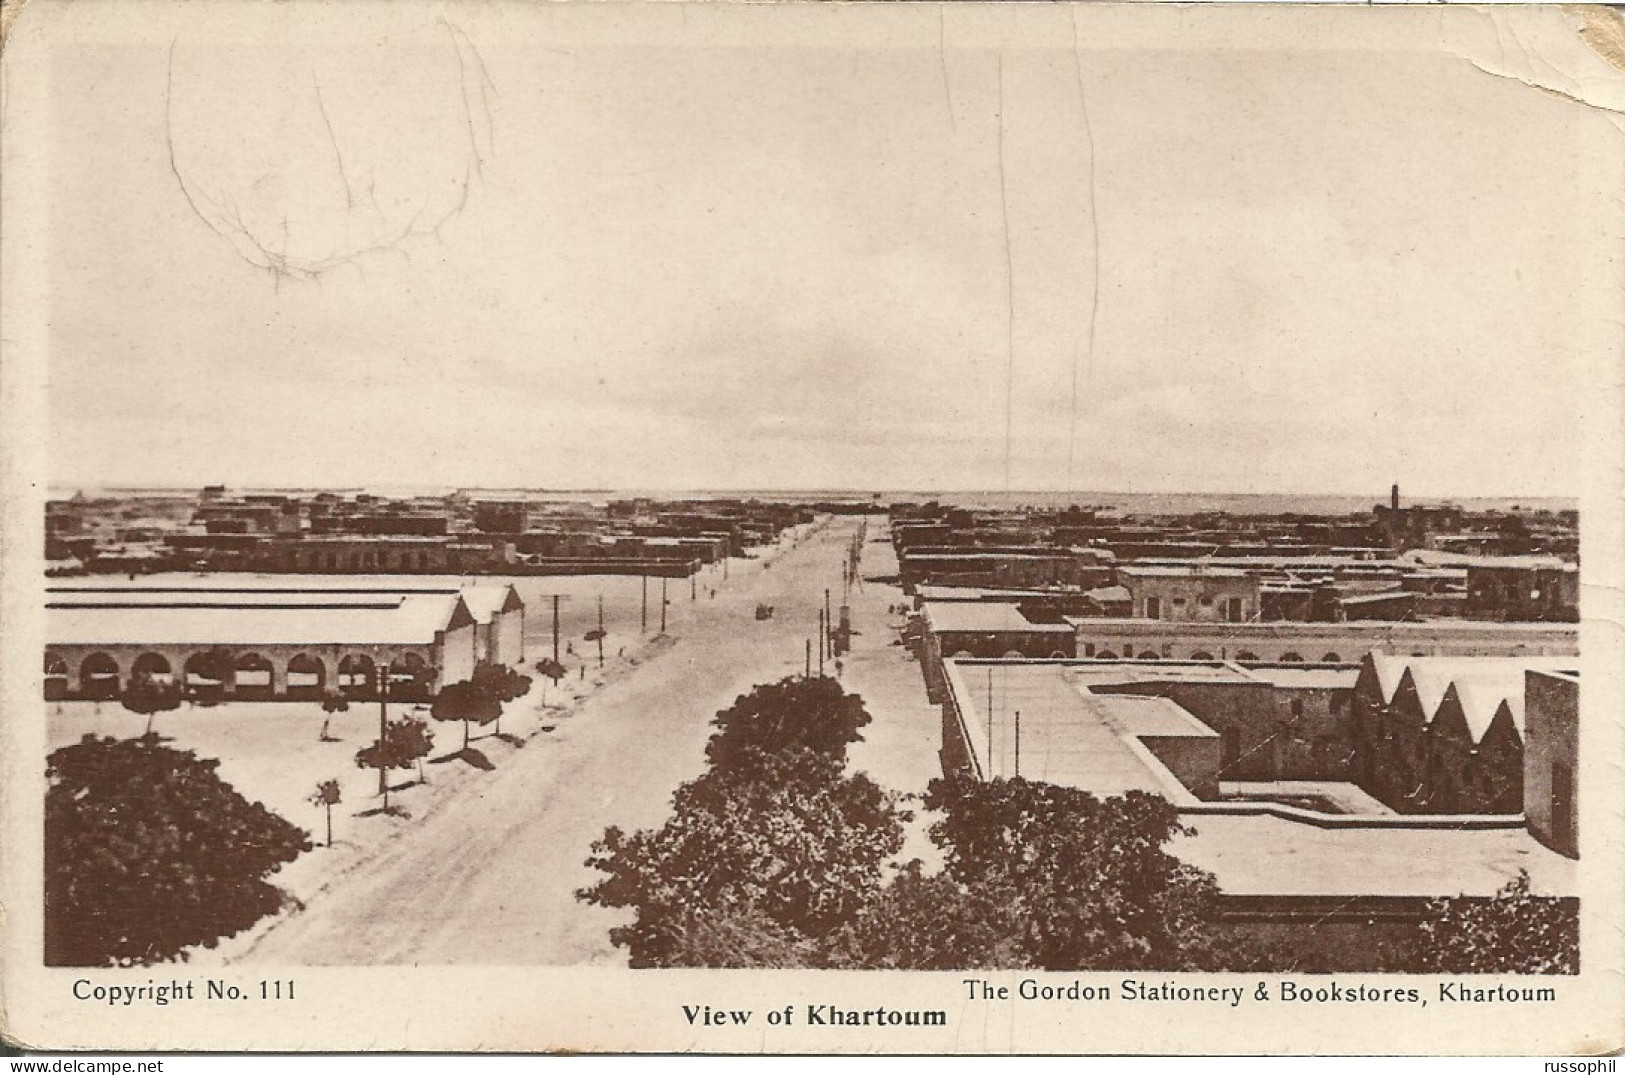 SOUDAN - SUDAN - VIEW OF KHARTOUM - PUB. THE GORDON STATIONERY AND BOOKSTORE N° 111 - 1927 - Soedan